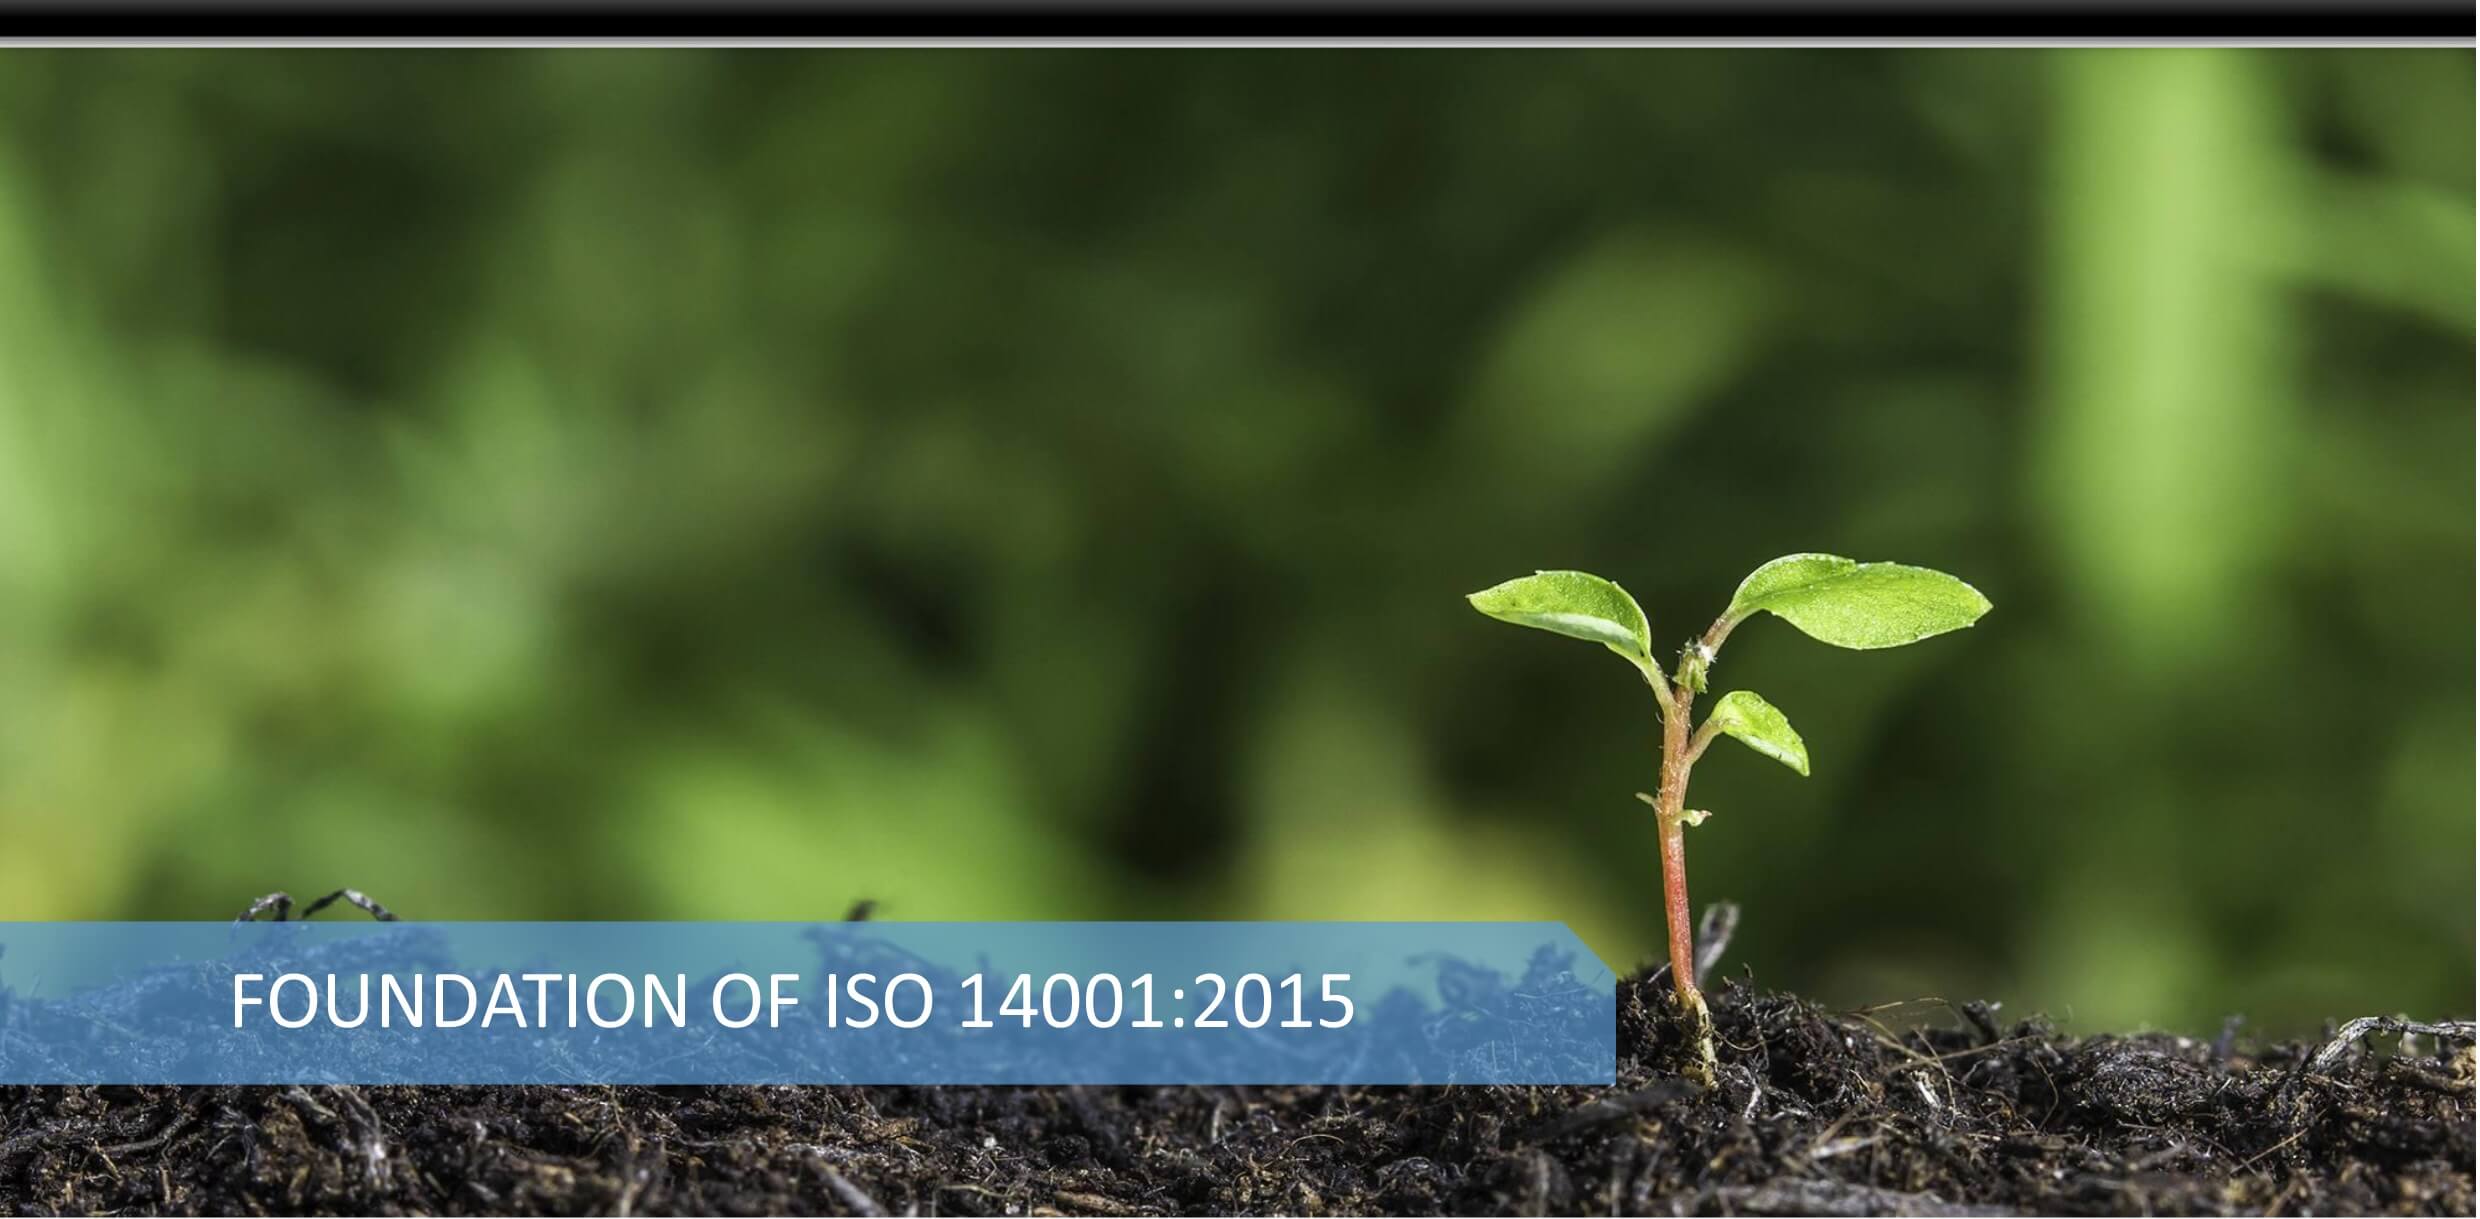 MSP0005 ISO 14001:2015 Foundation